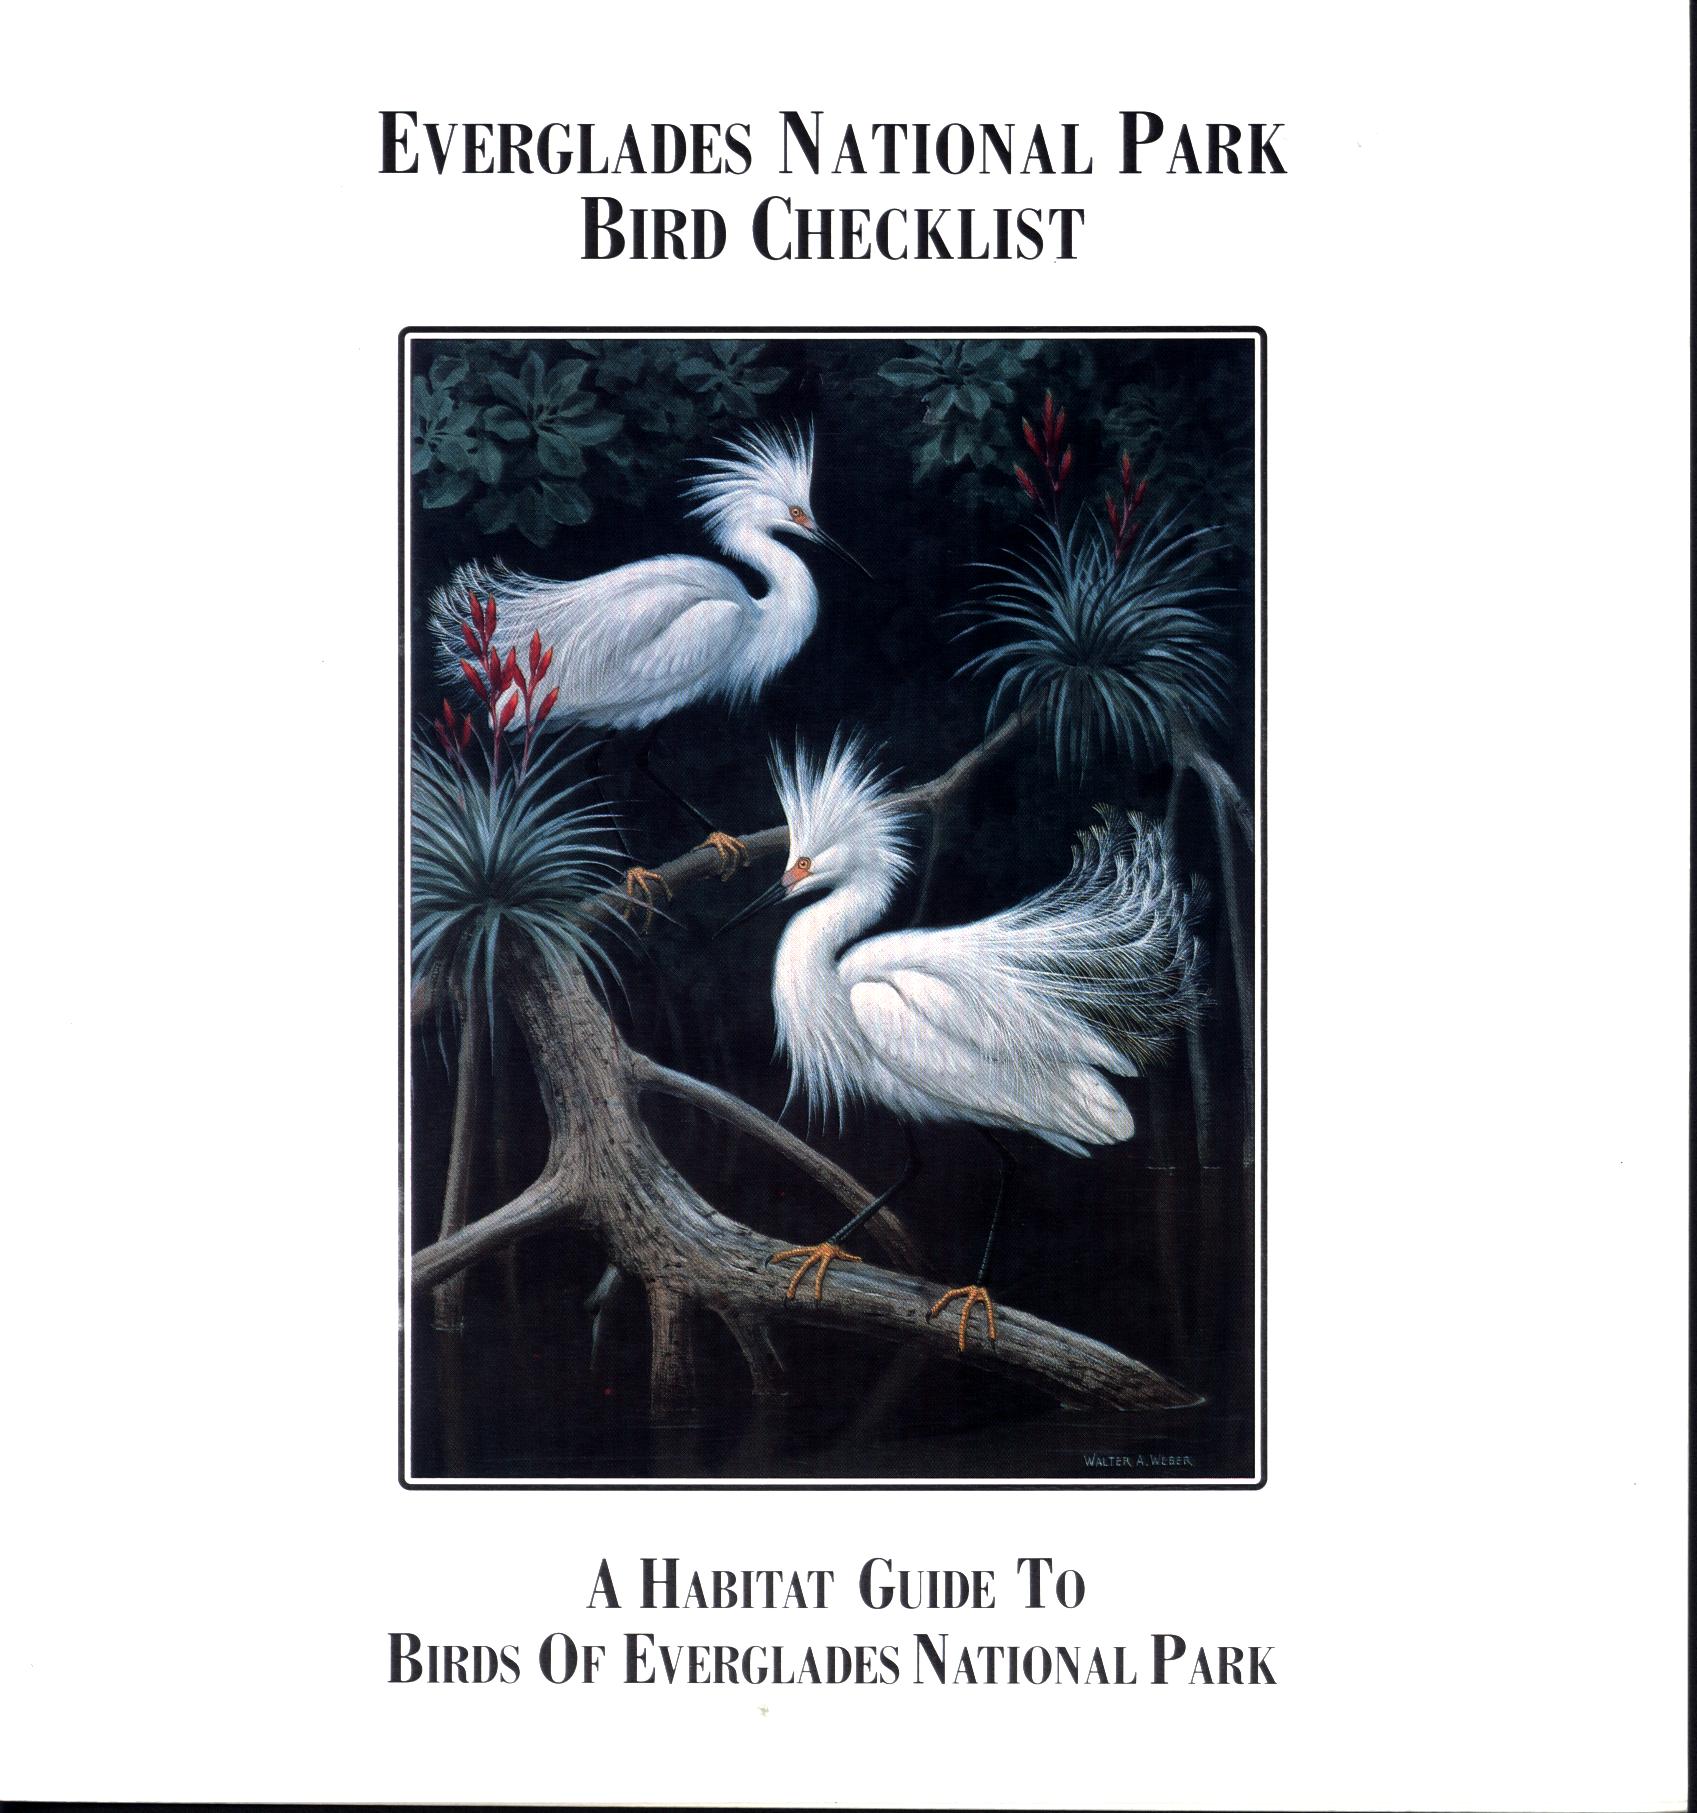 EVERGLADES NATIONAL PARK BIRD CHECKLIST: a habitat guide to birds of Everglades National Park.